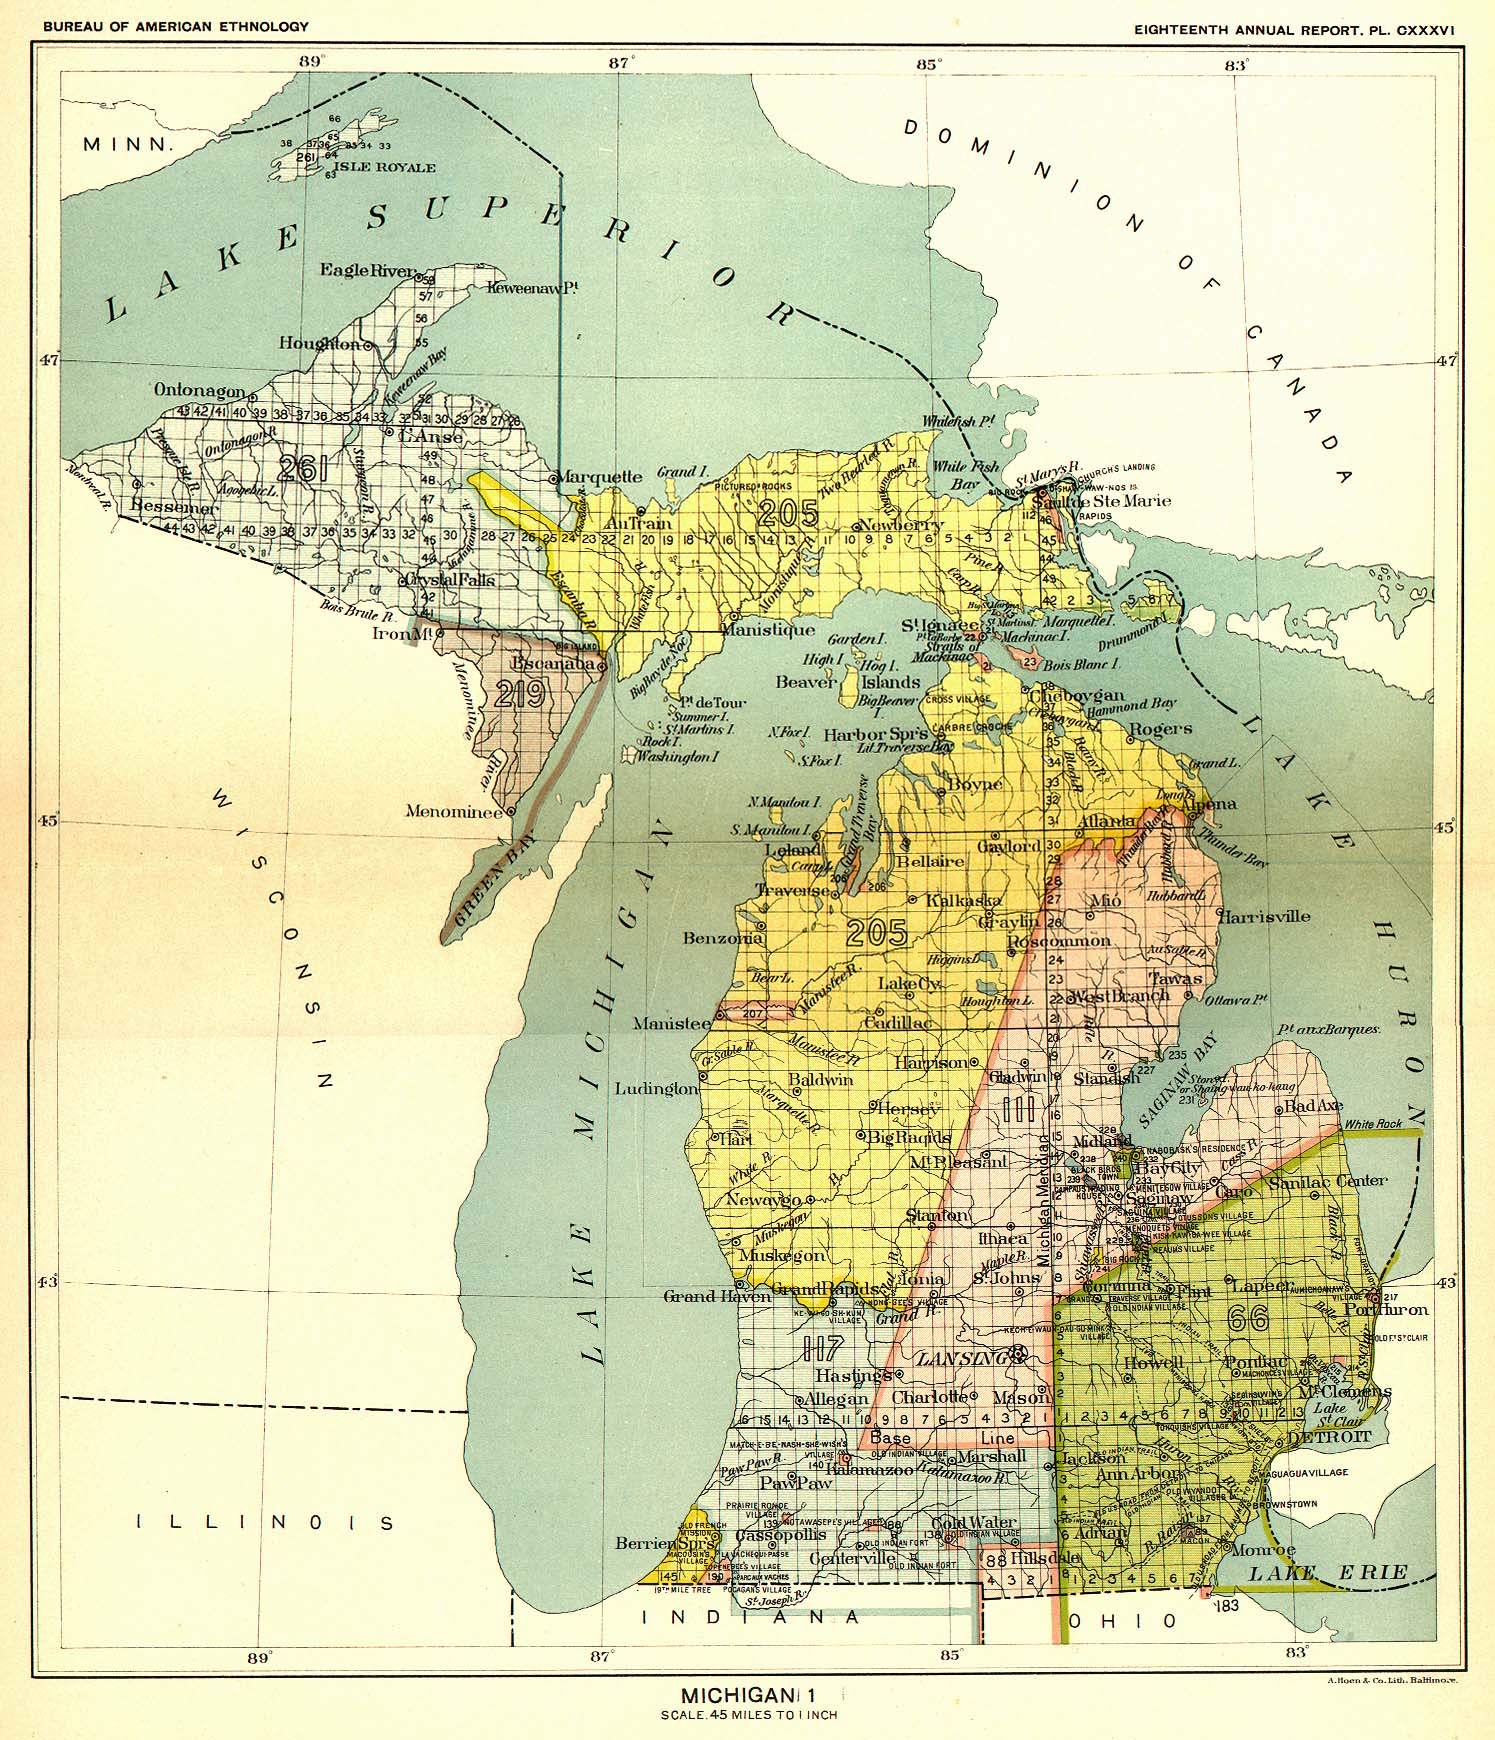 Michigan 1, Map 29